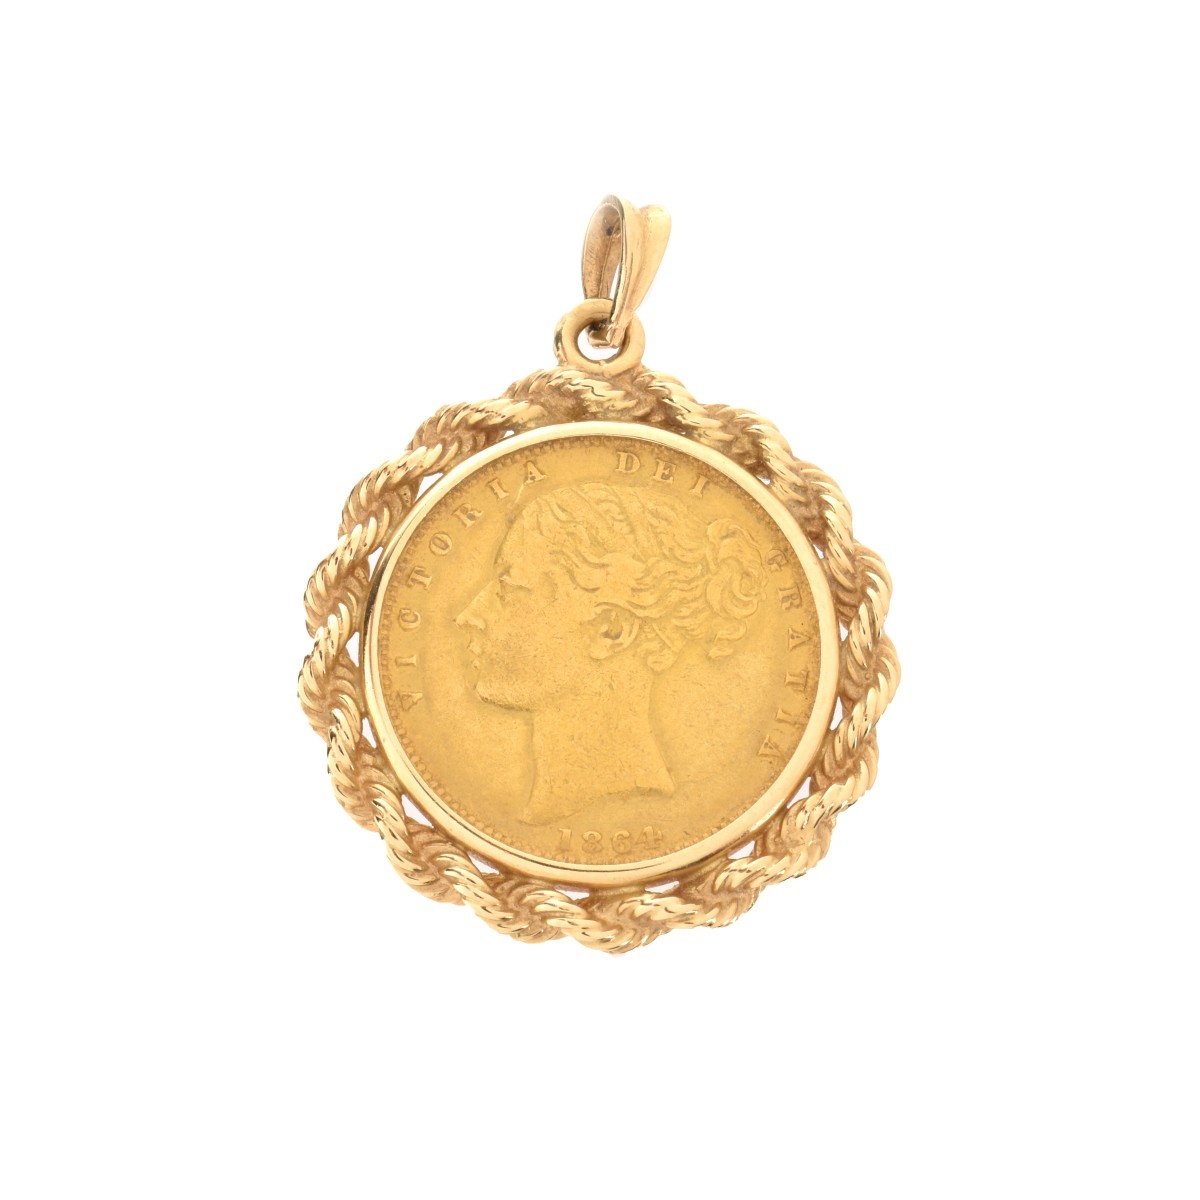 1864 Gold Sovereign Pendant